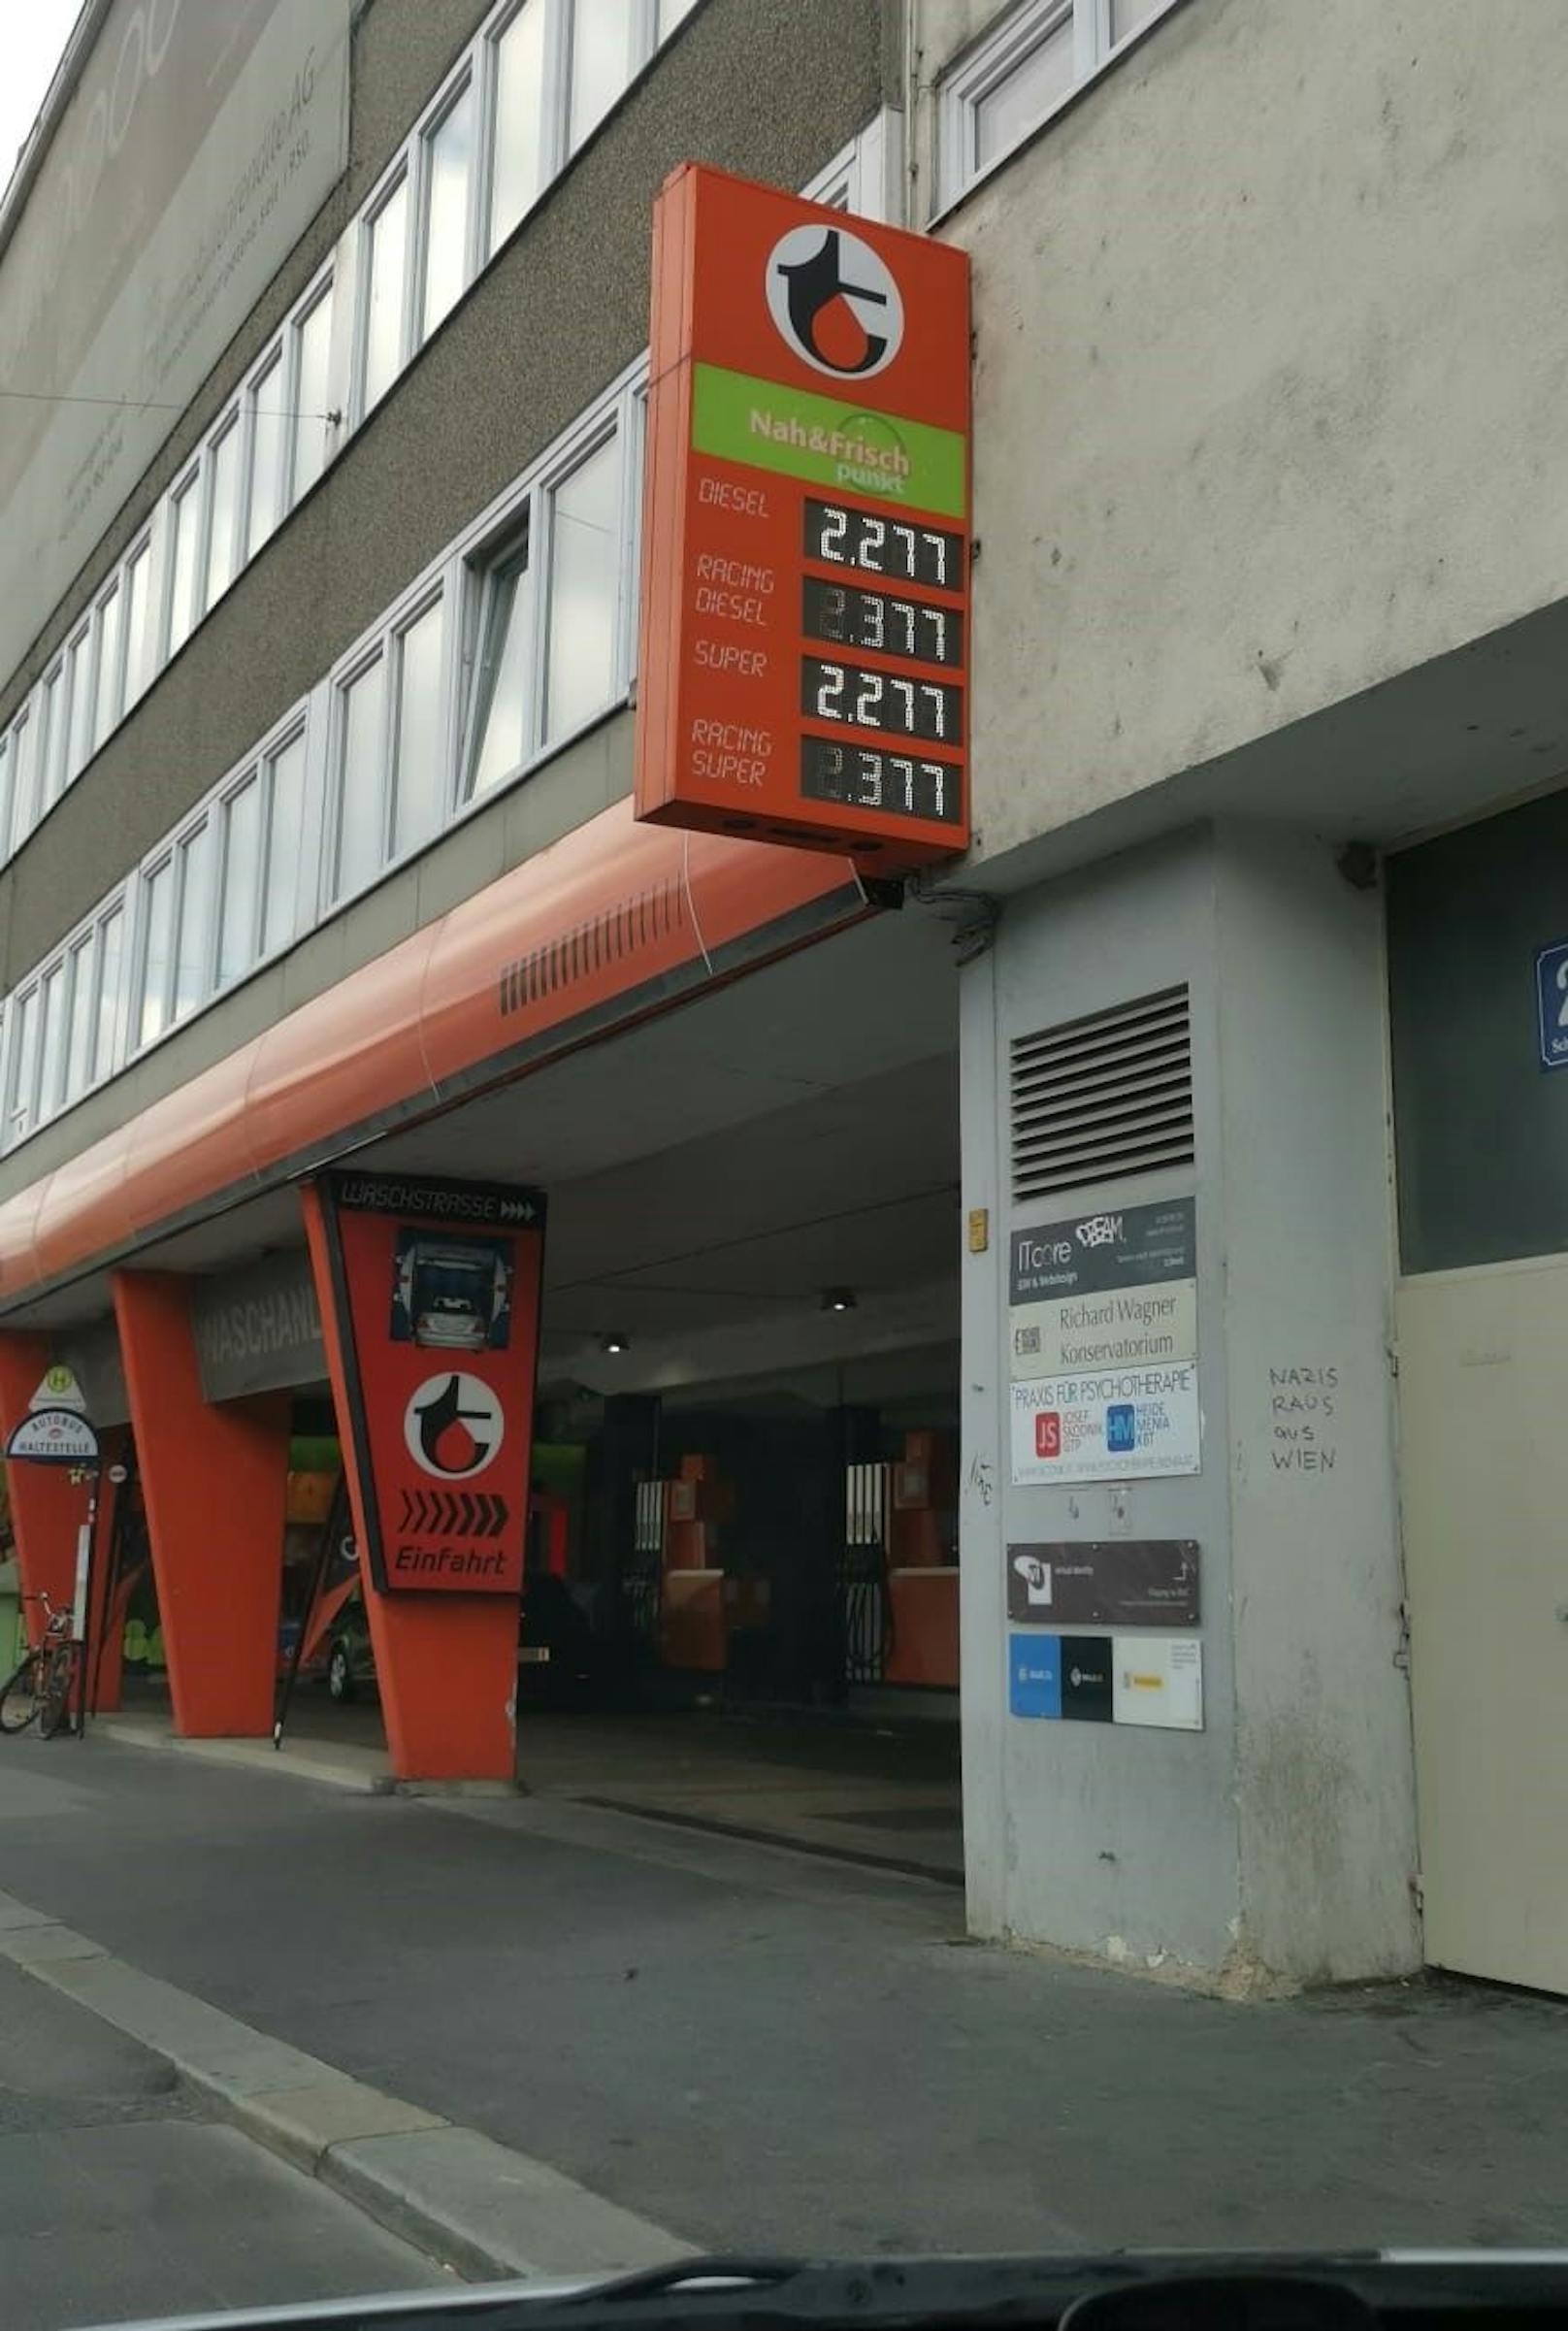 Tankstelle Schönbrunner Straße 213 in Wien-Meidling